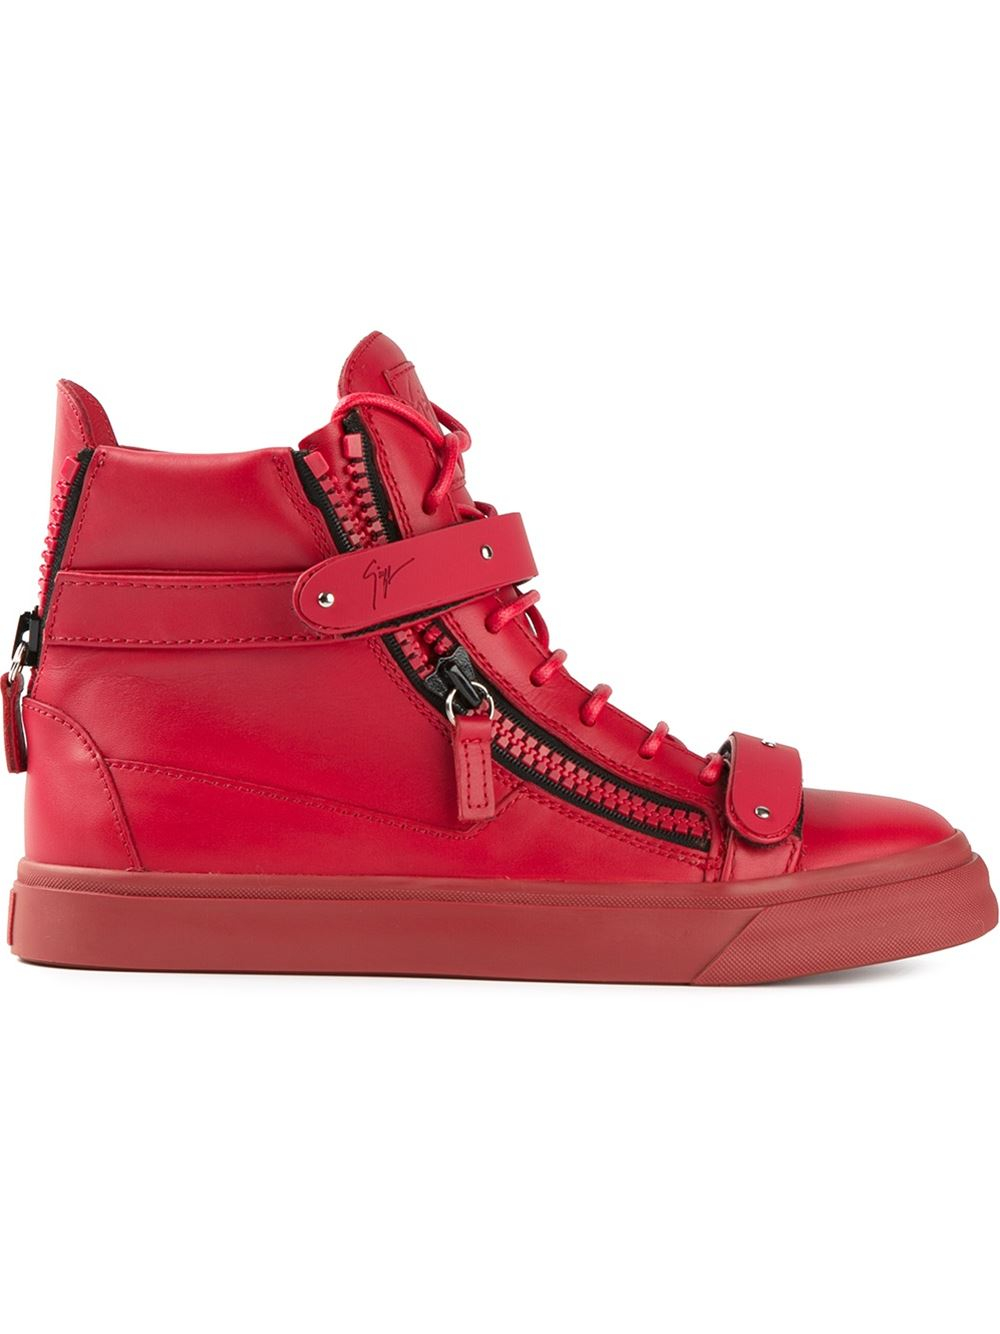 Lyst - Giuseppe Zanotti Zip Detail Hi-top Sneakers in Red